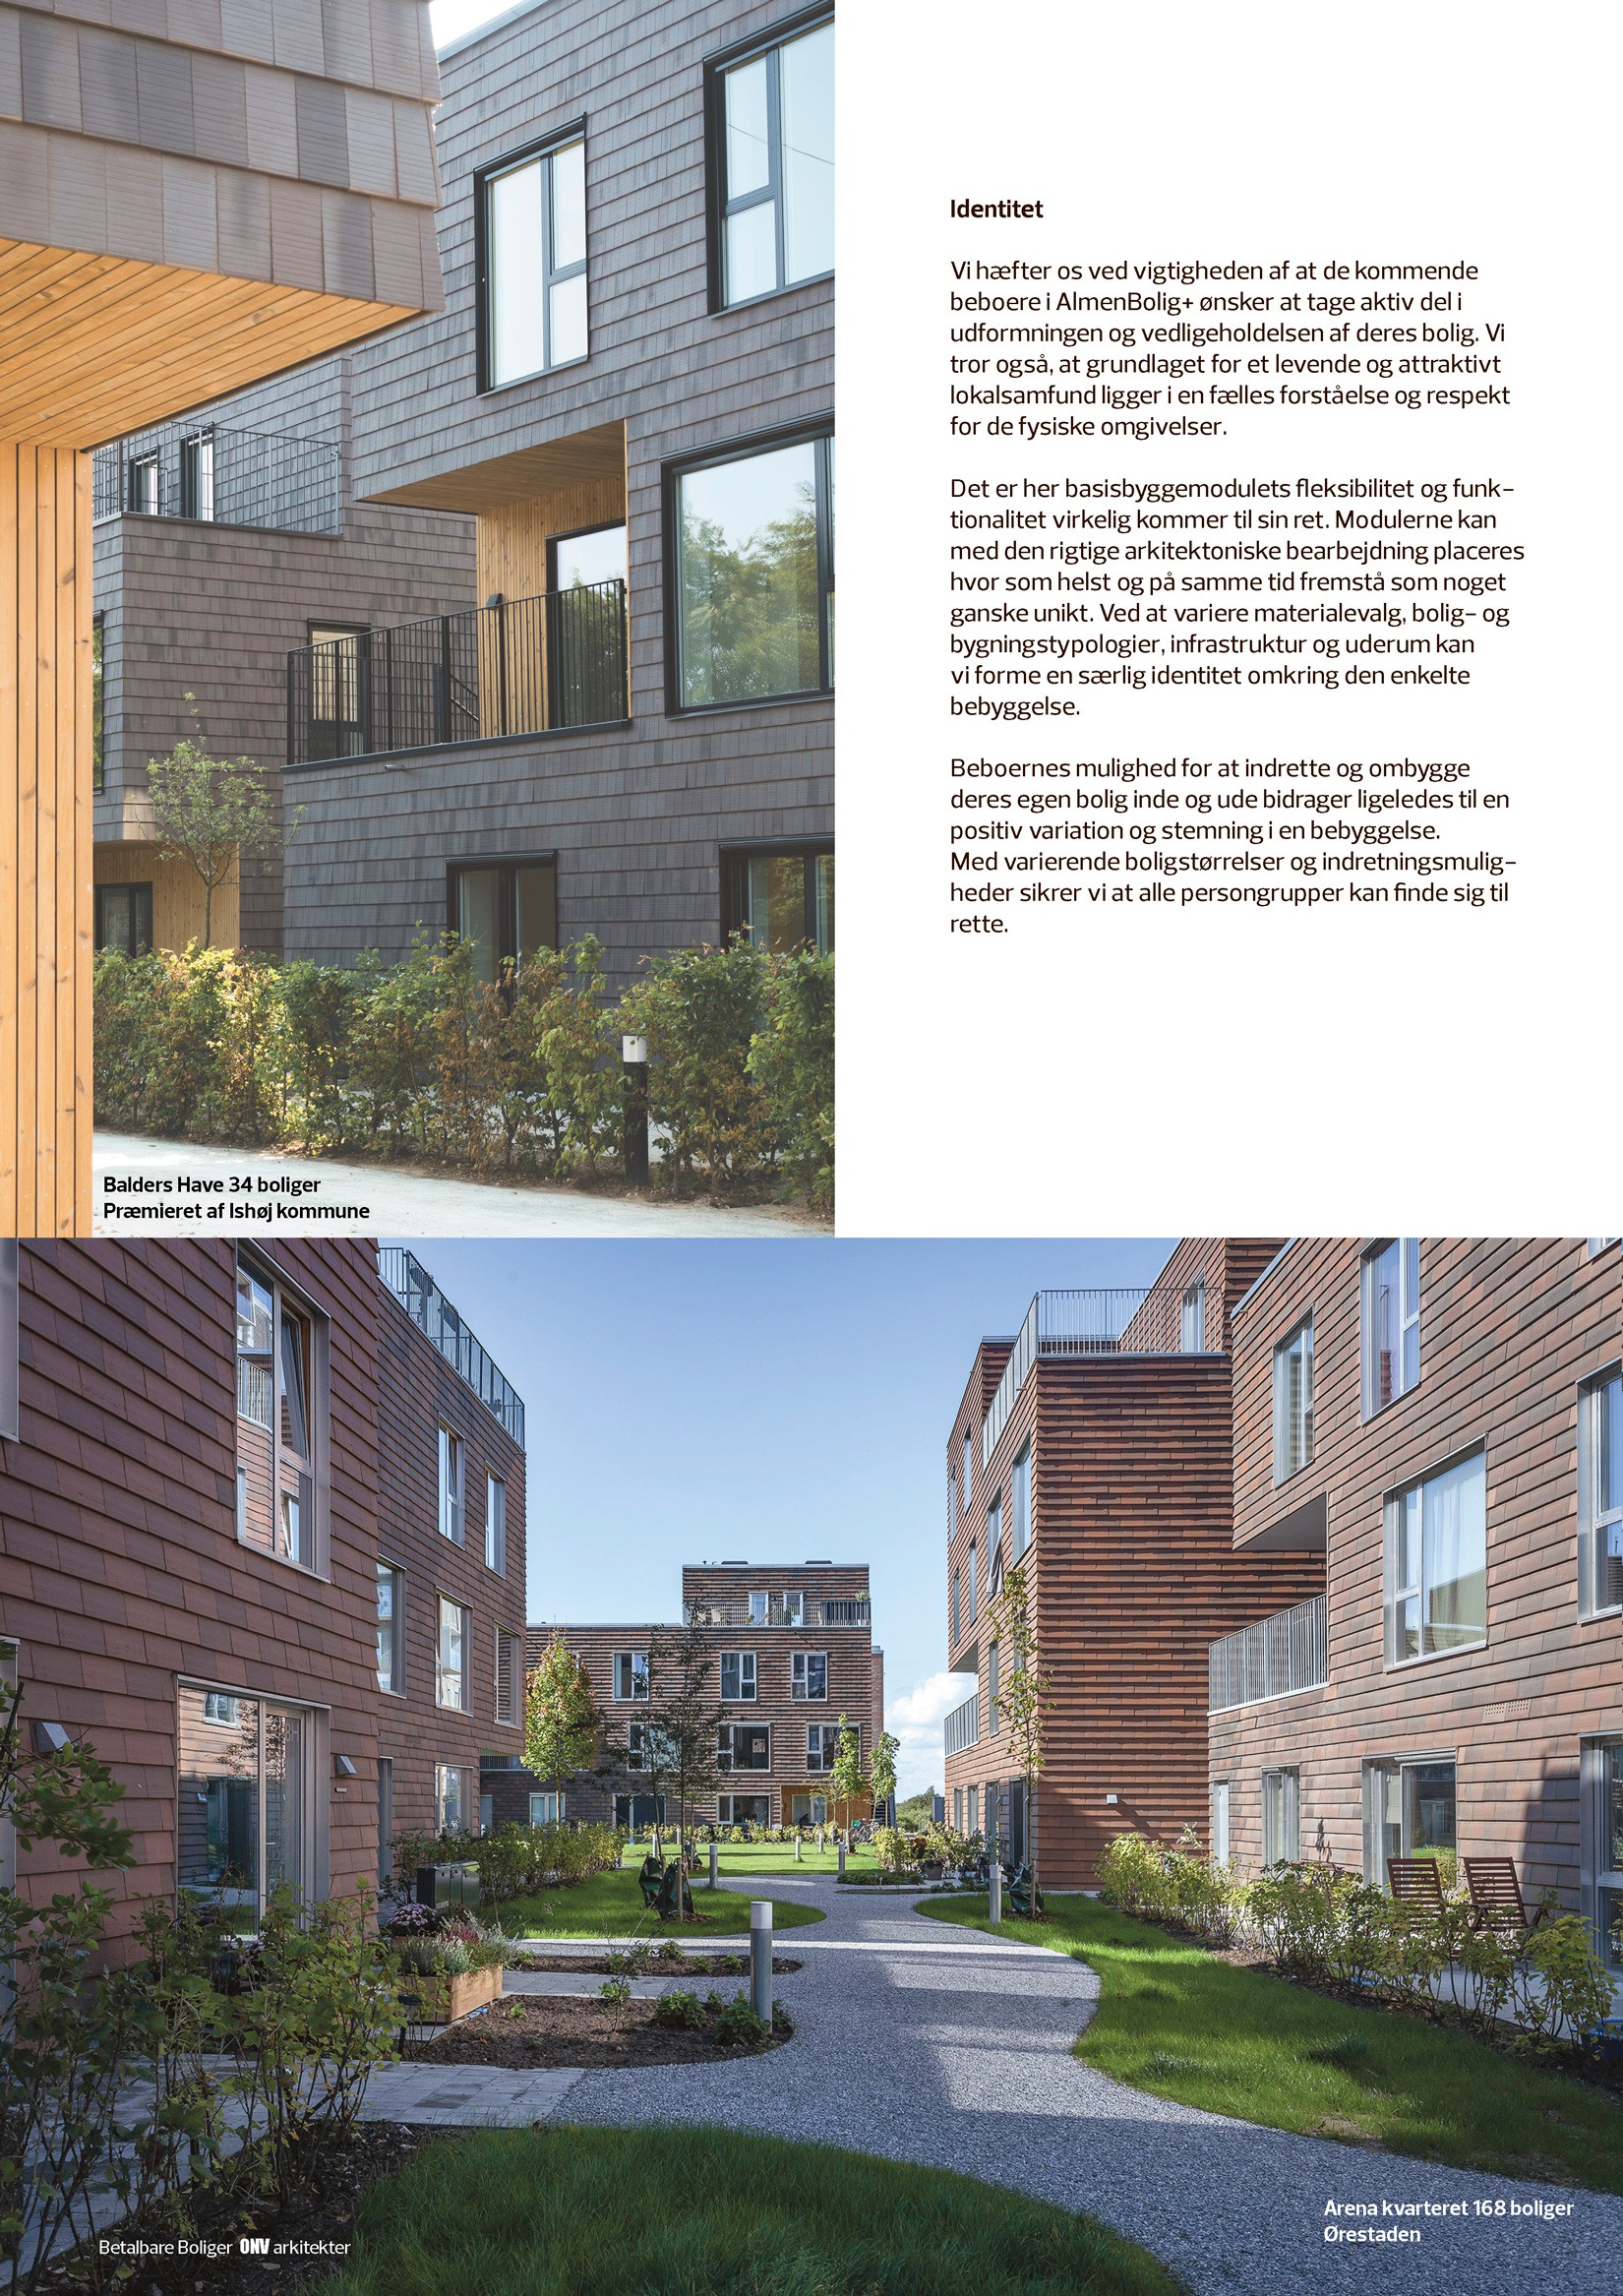 Almenbolig+ ONV arkitekter præfabboliger prefab housing 2